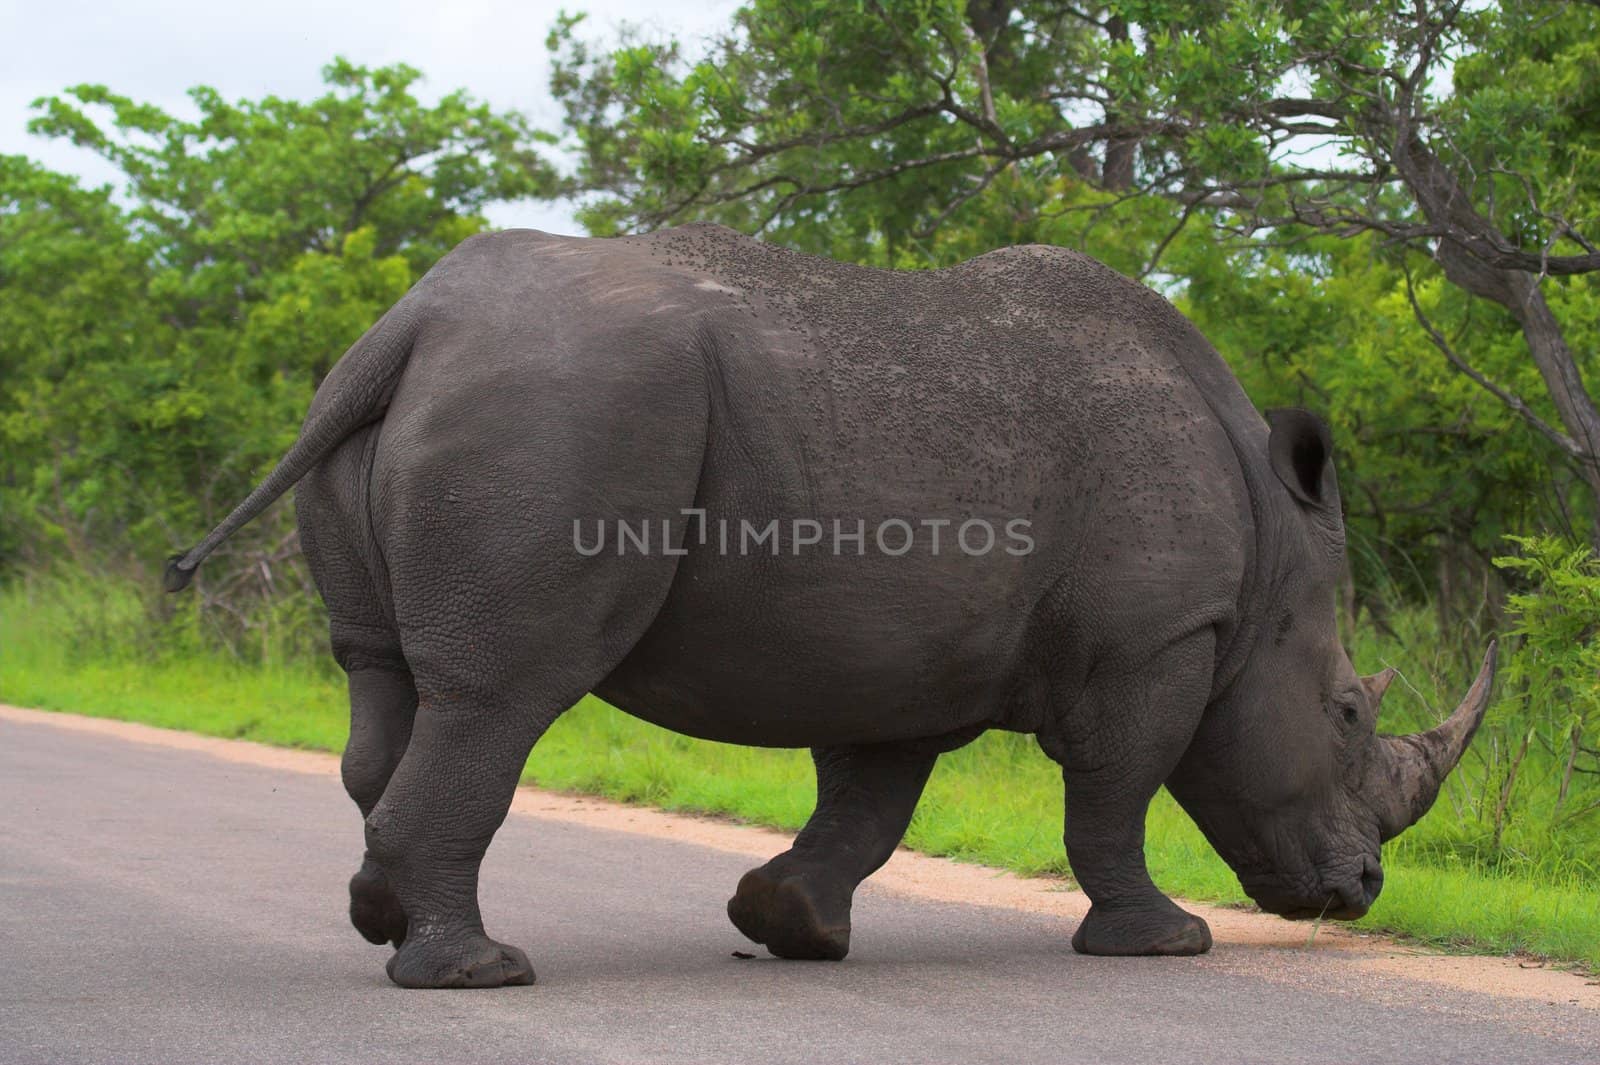 Rhinoceros crossing the road in Africa by nightowlza